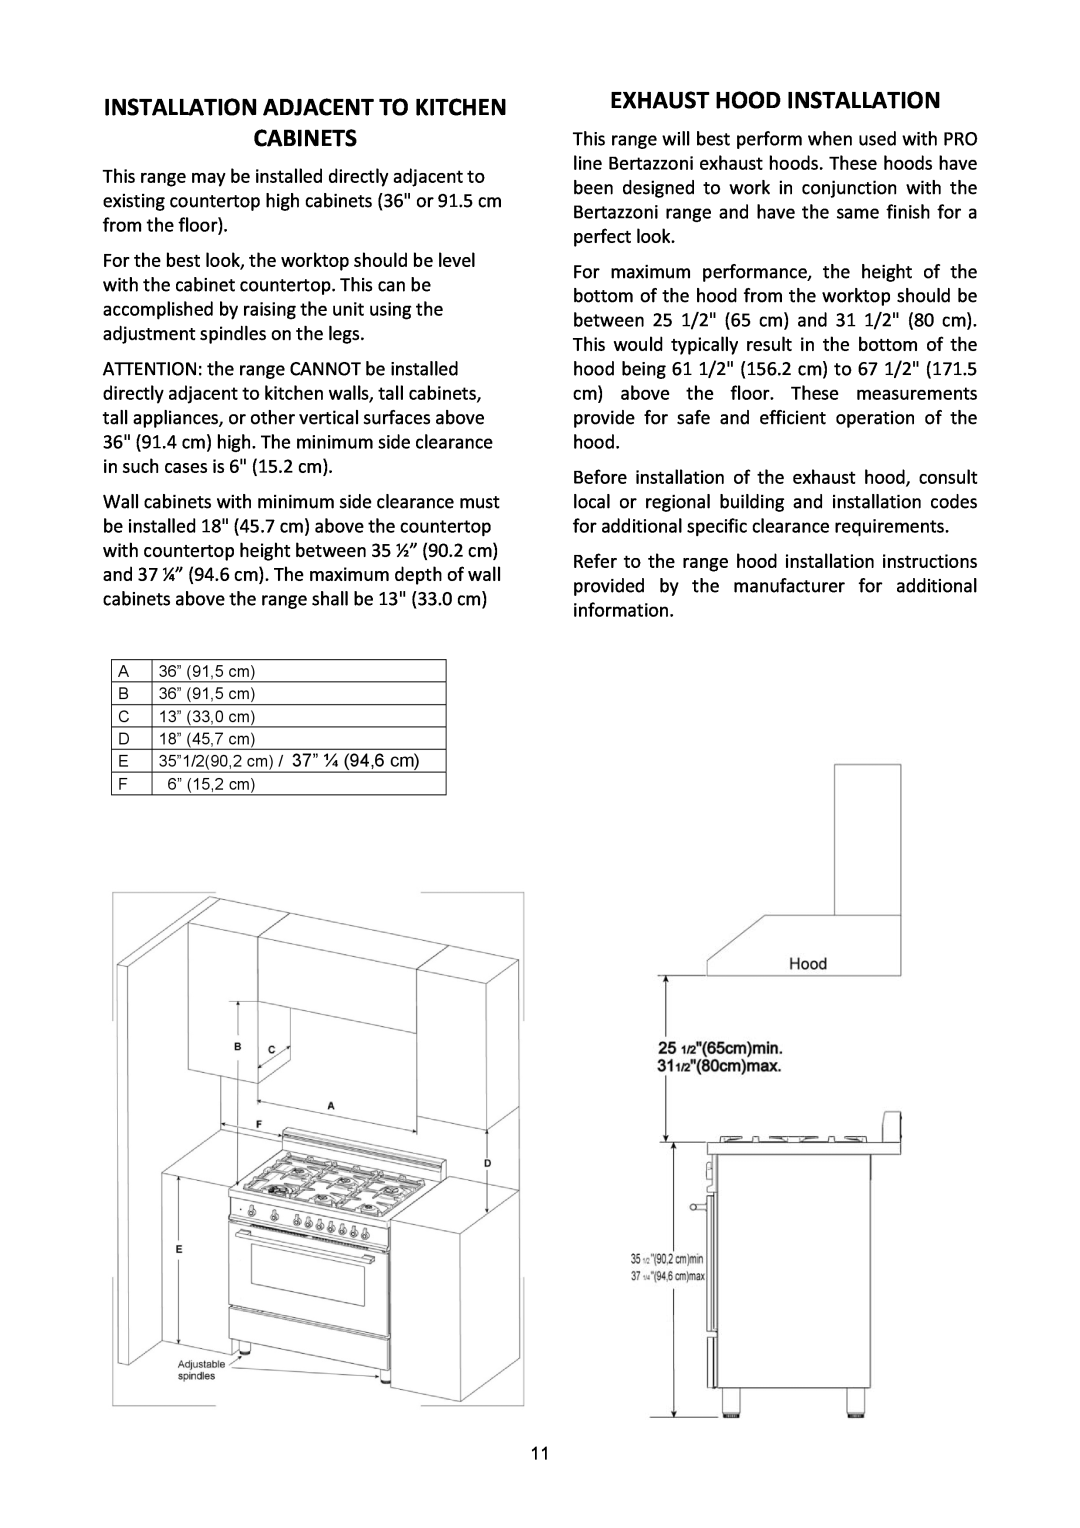 Bertazzoni X365GGVBI, X365GGVGI, X365GGVCR manual Installation Adjacent To Kitchen Cabinets, Exhaust Hood Installation 